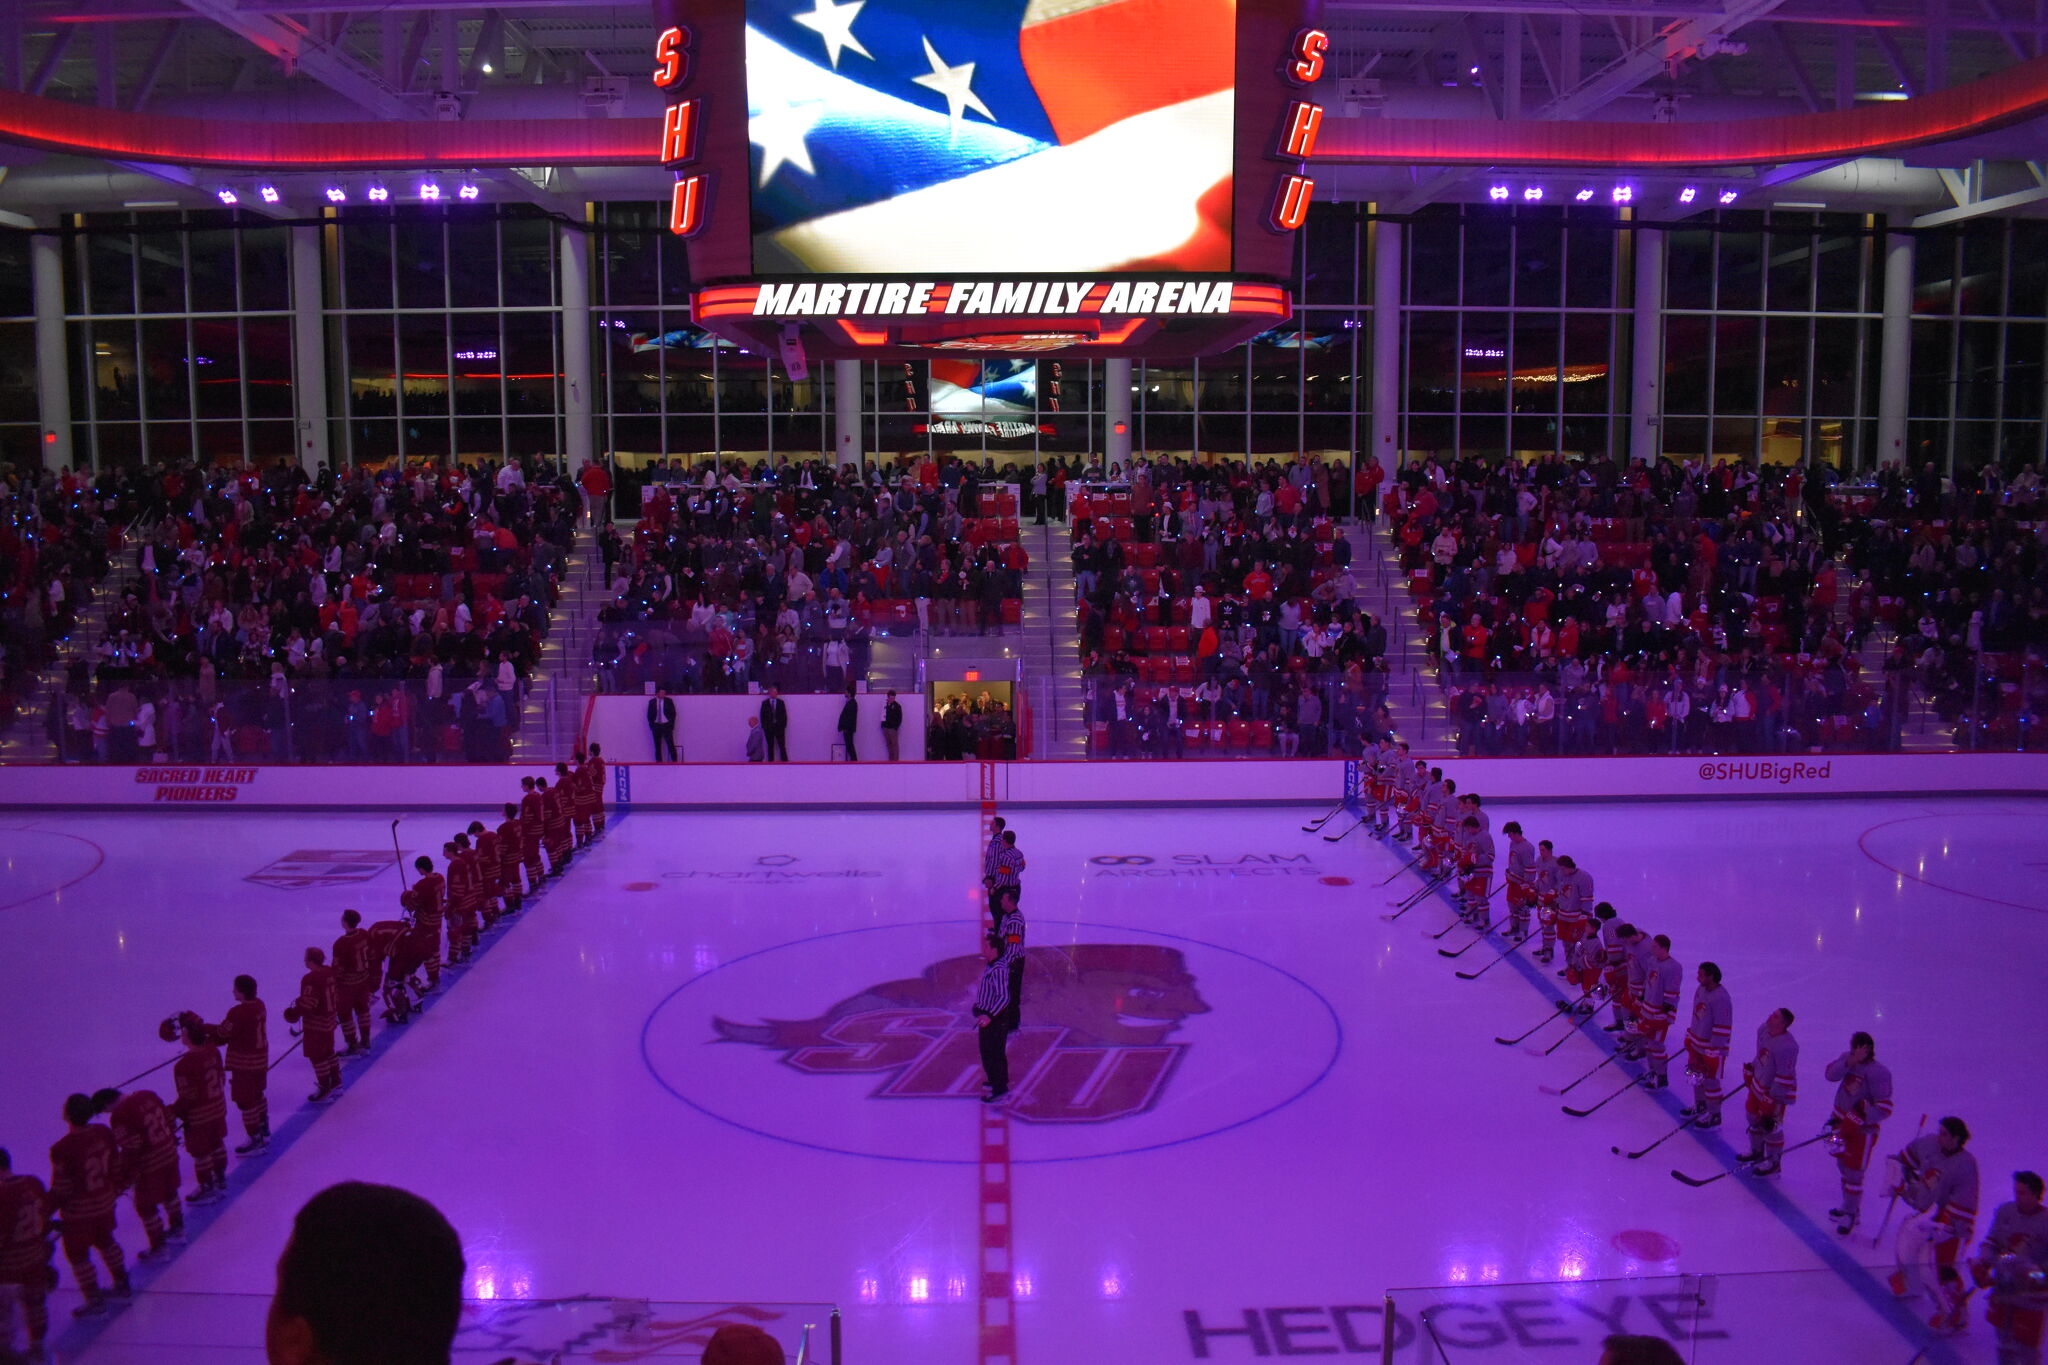 Sacred Heart University opens on-campus hockey arena Saturday